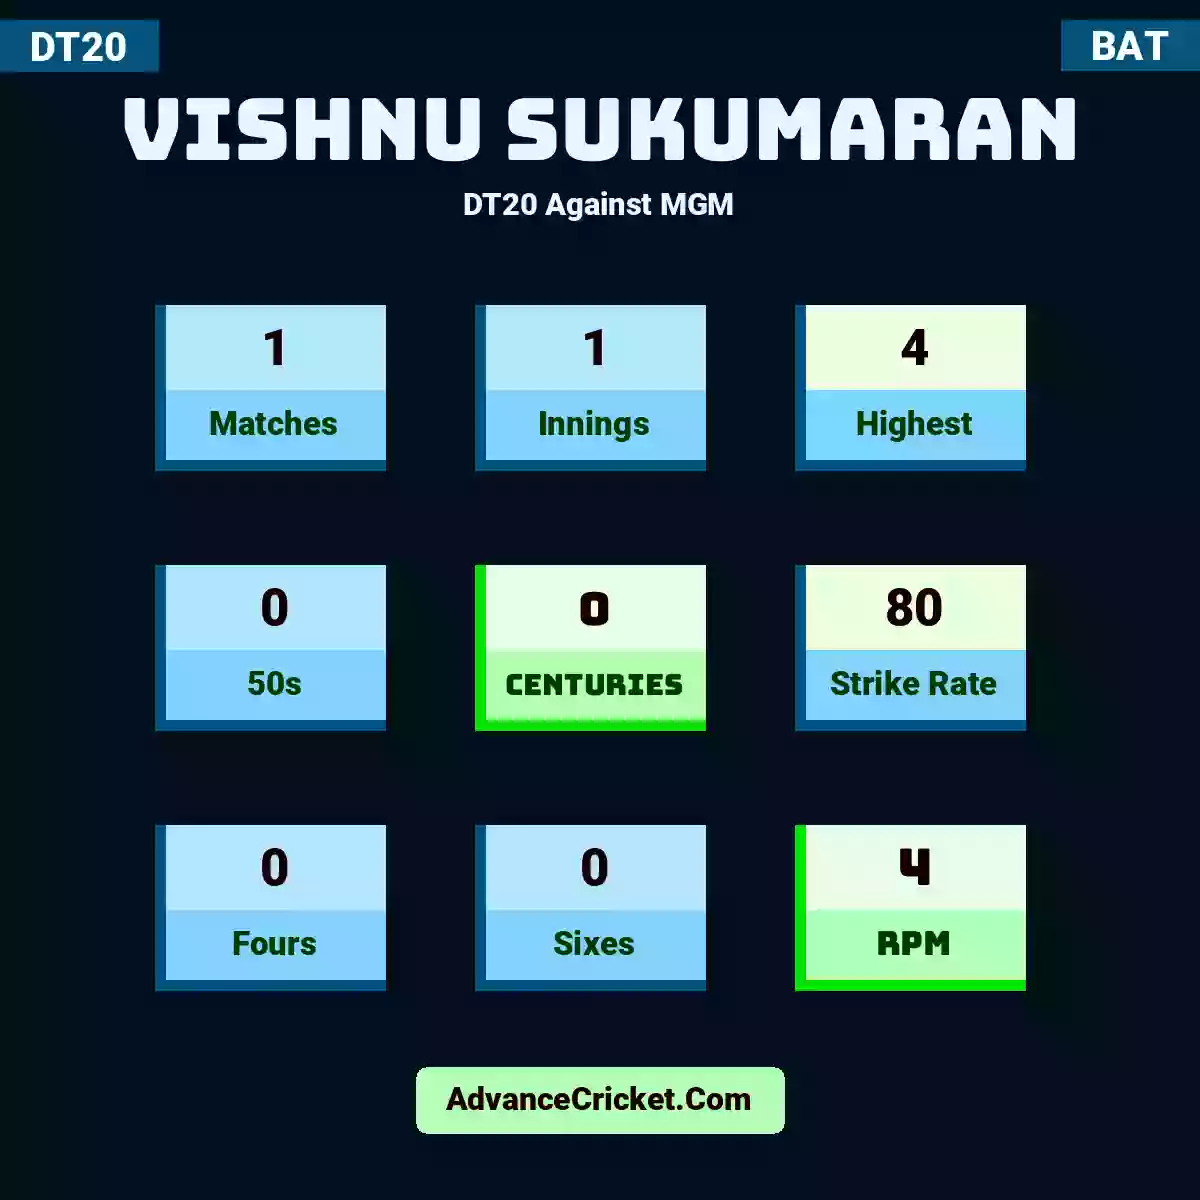 Vishnu Sukumaran DT20  Against MGM, Vishnu Sukumaran played 1 matches, scored 4 runs as highest, 0 half-centuries, and 0 centuries, with a strike rate of 80. V.Sukumaran hit 0 fours and 0 sixes, with an RPM of 4.